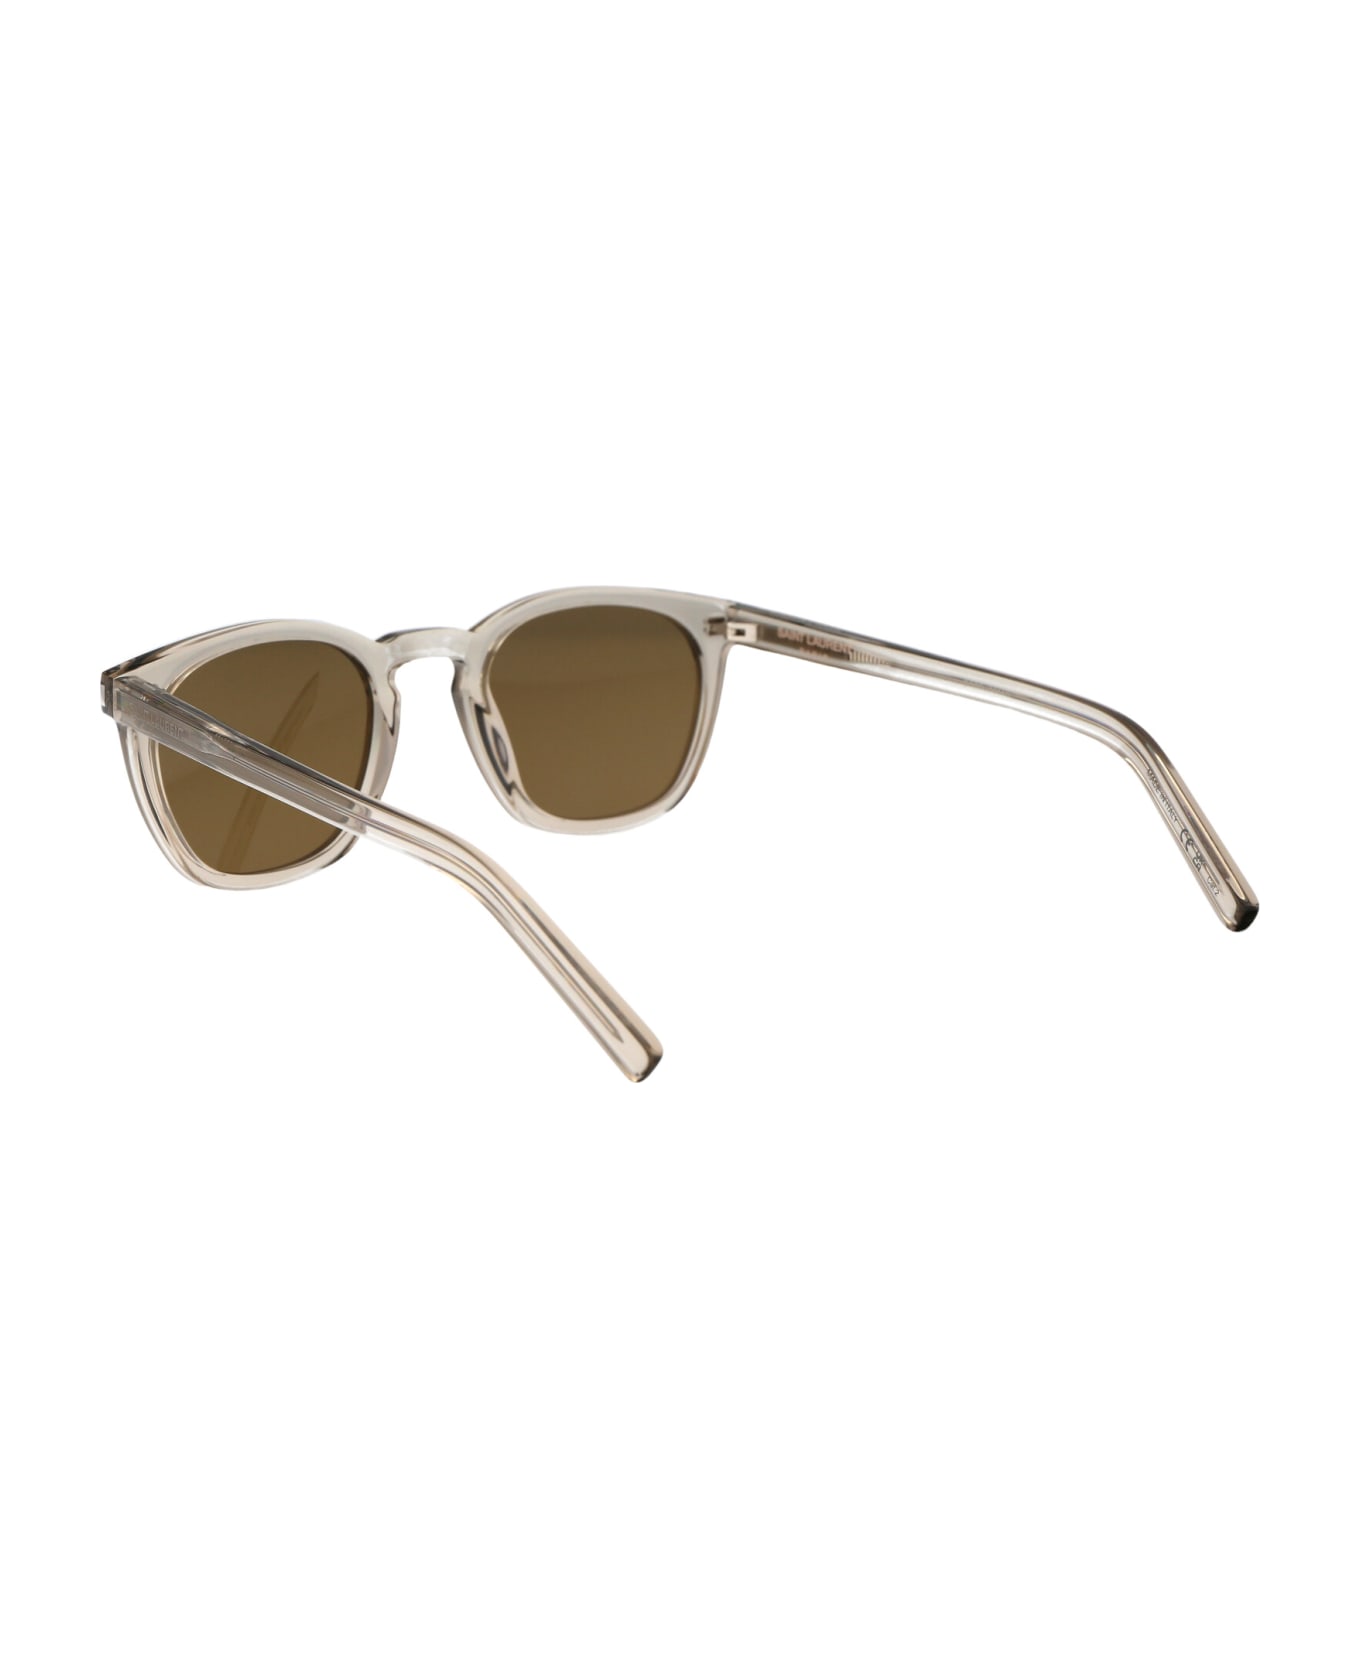 Saint Laurent Eyewear Sl 28 Sunglasses - 047 BEIGE BEIGE BROWN